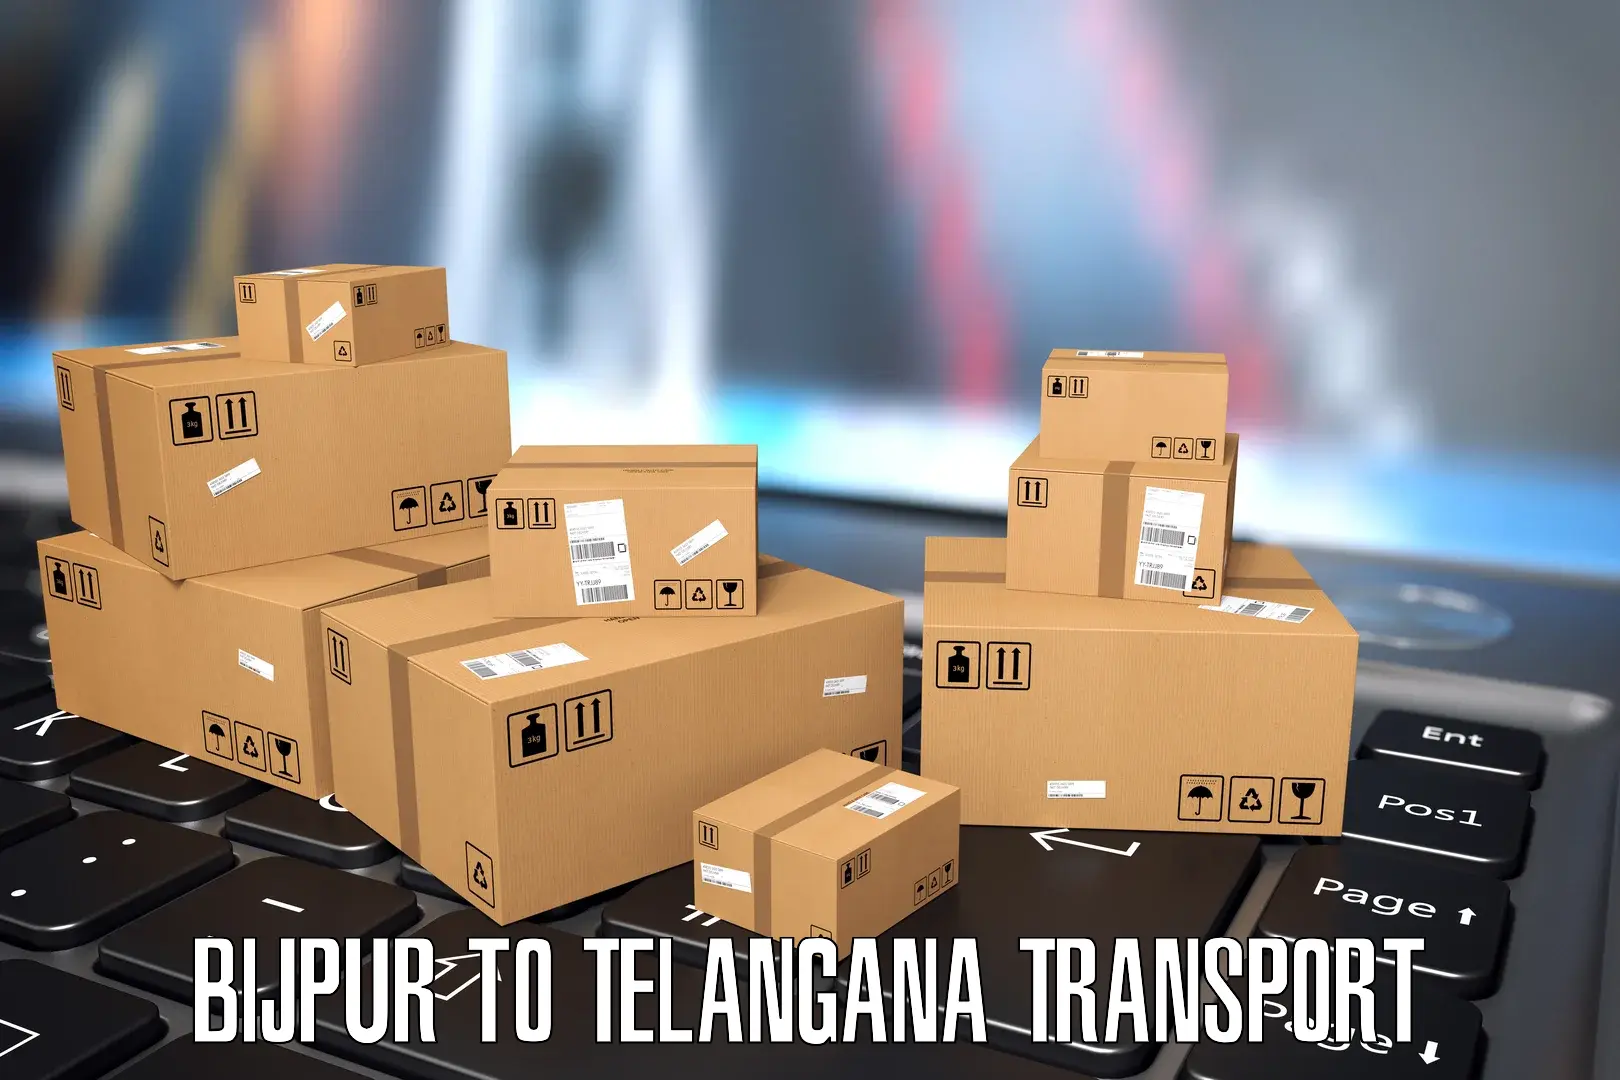 Air freight transport services Bijpur to Manneguda